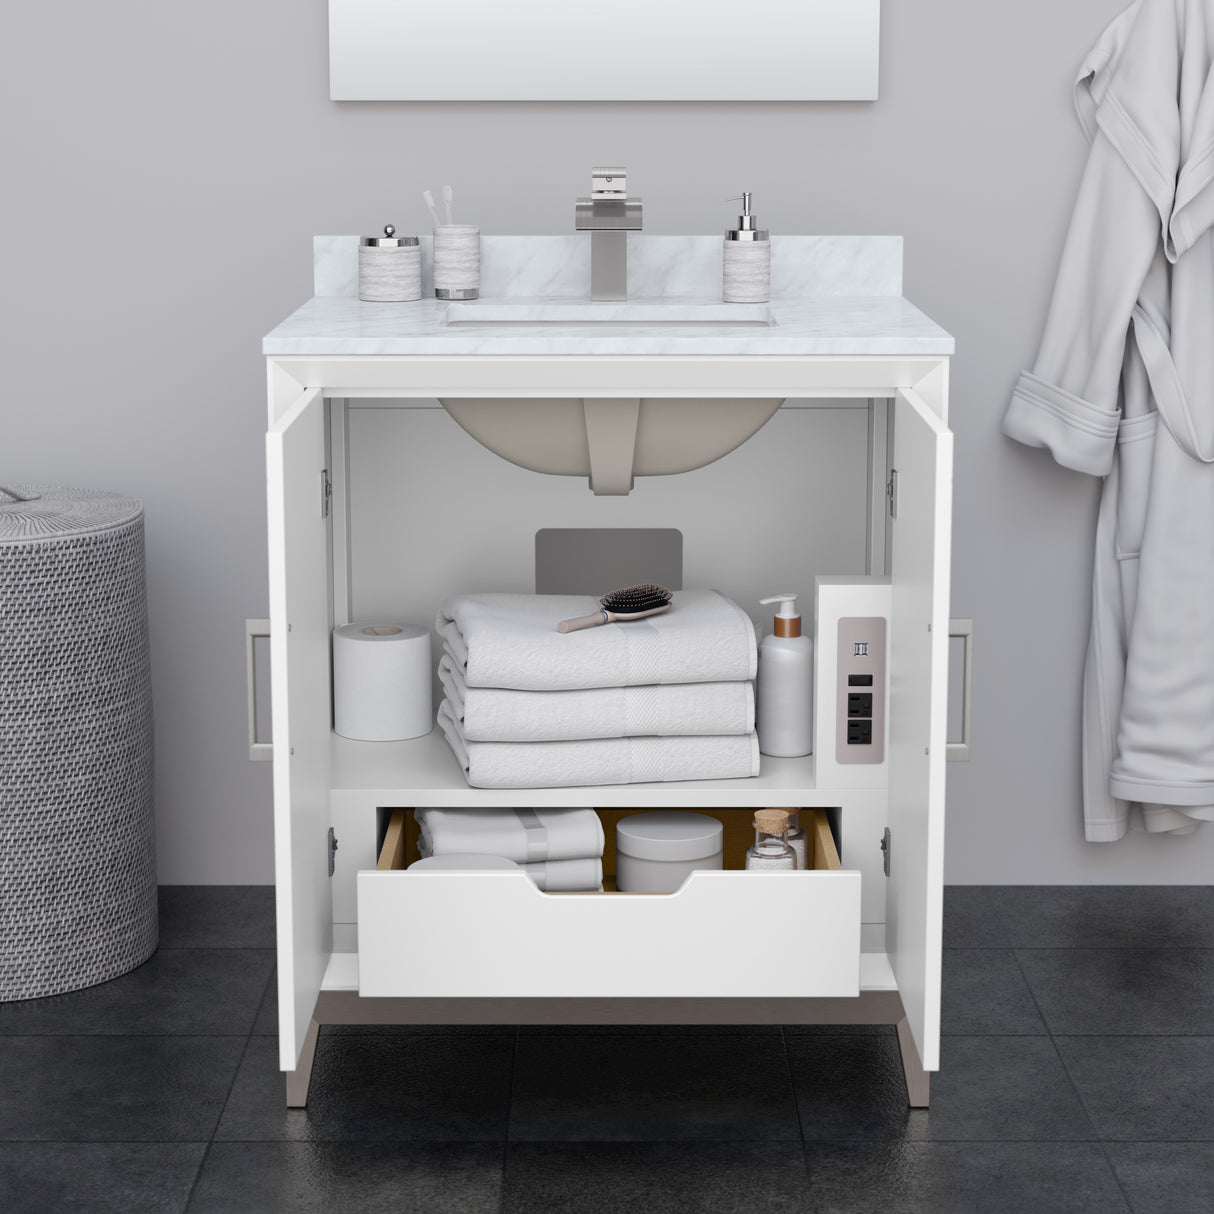 Marlena 30 Inch Single Bathroom Vanity in White White Carrara Marble Countertop Undermount Square Sink Brushed Nickel Trim